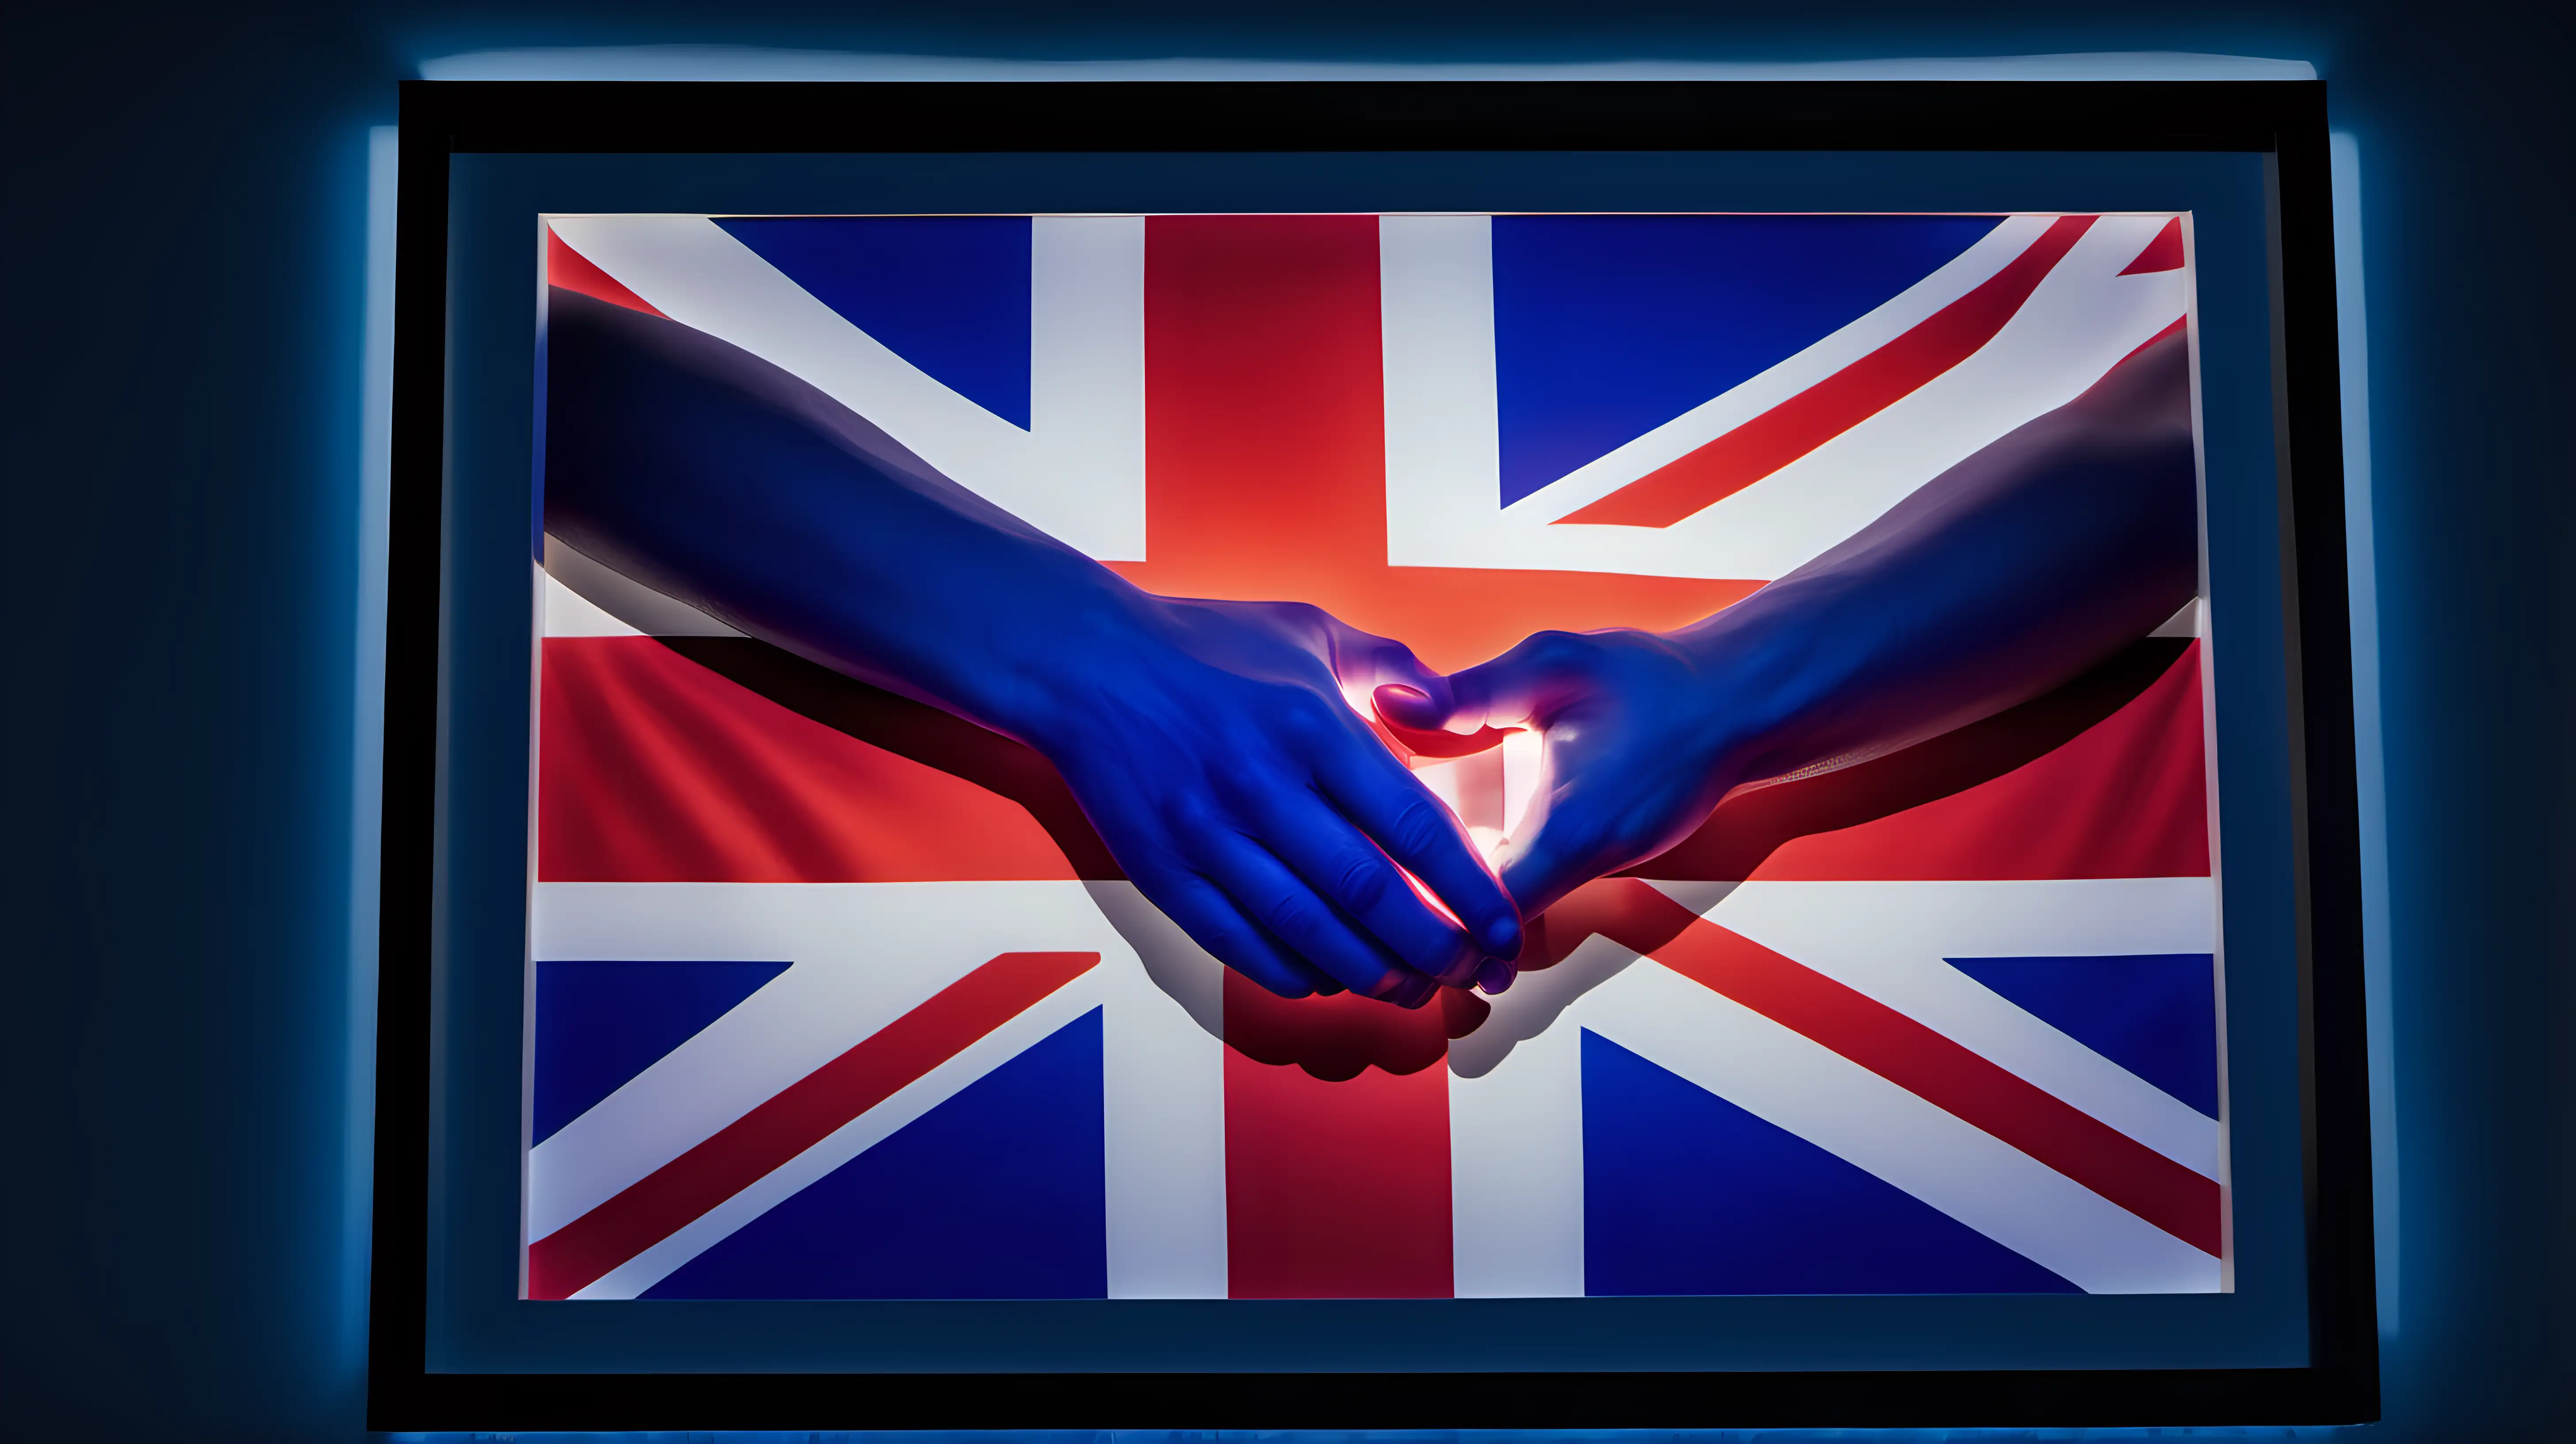 Patriotic Gesture Illuminated Hands Grasping Vibrant UK Flag